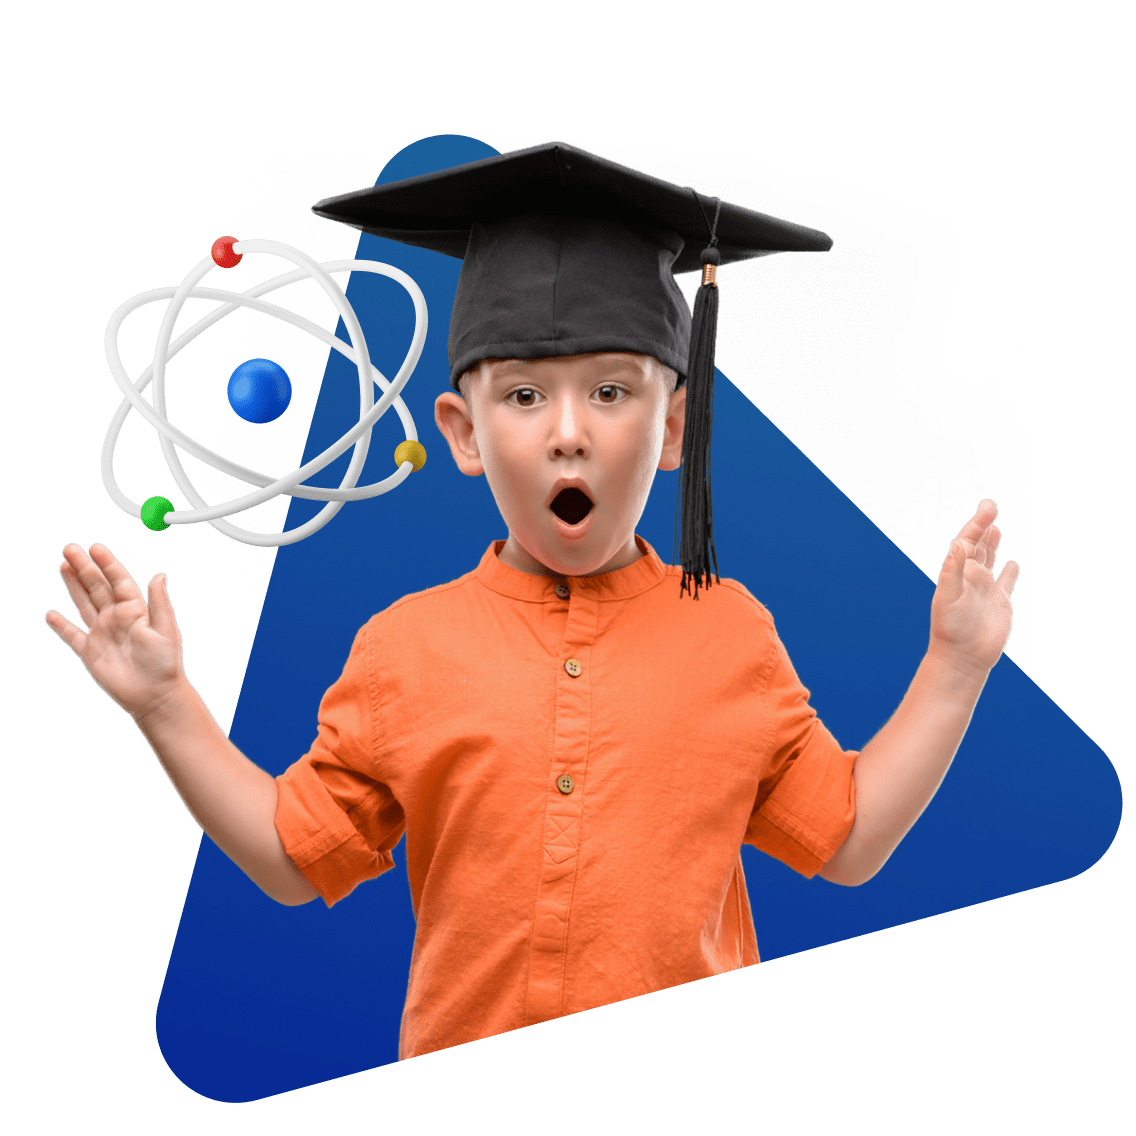 Ohio Online Schools imagen 6 (nombre 5 Young Boy Graduation Cap Science)